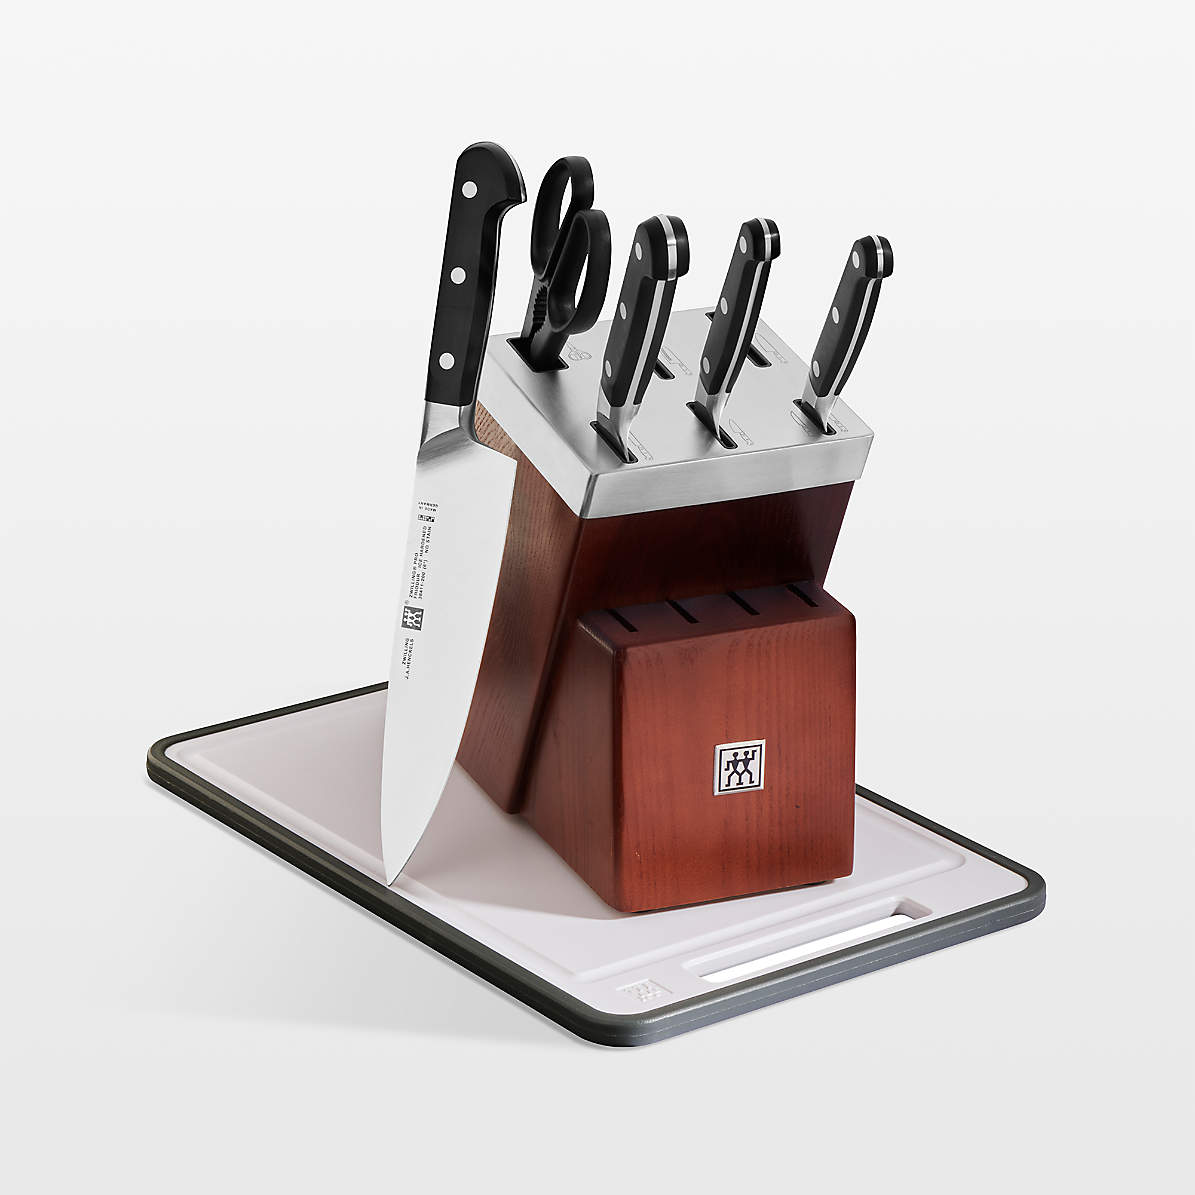 Smeg Knife Block & Knives Set (Set of 7)